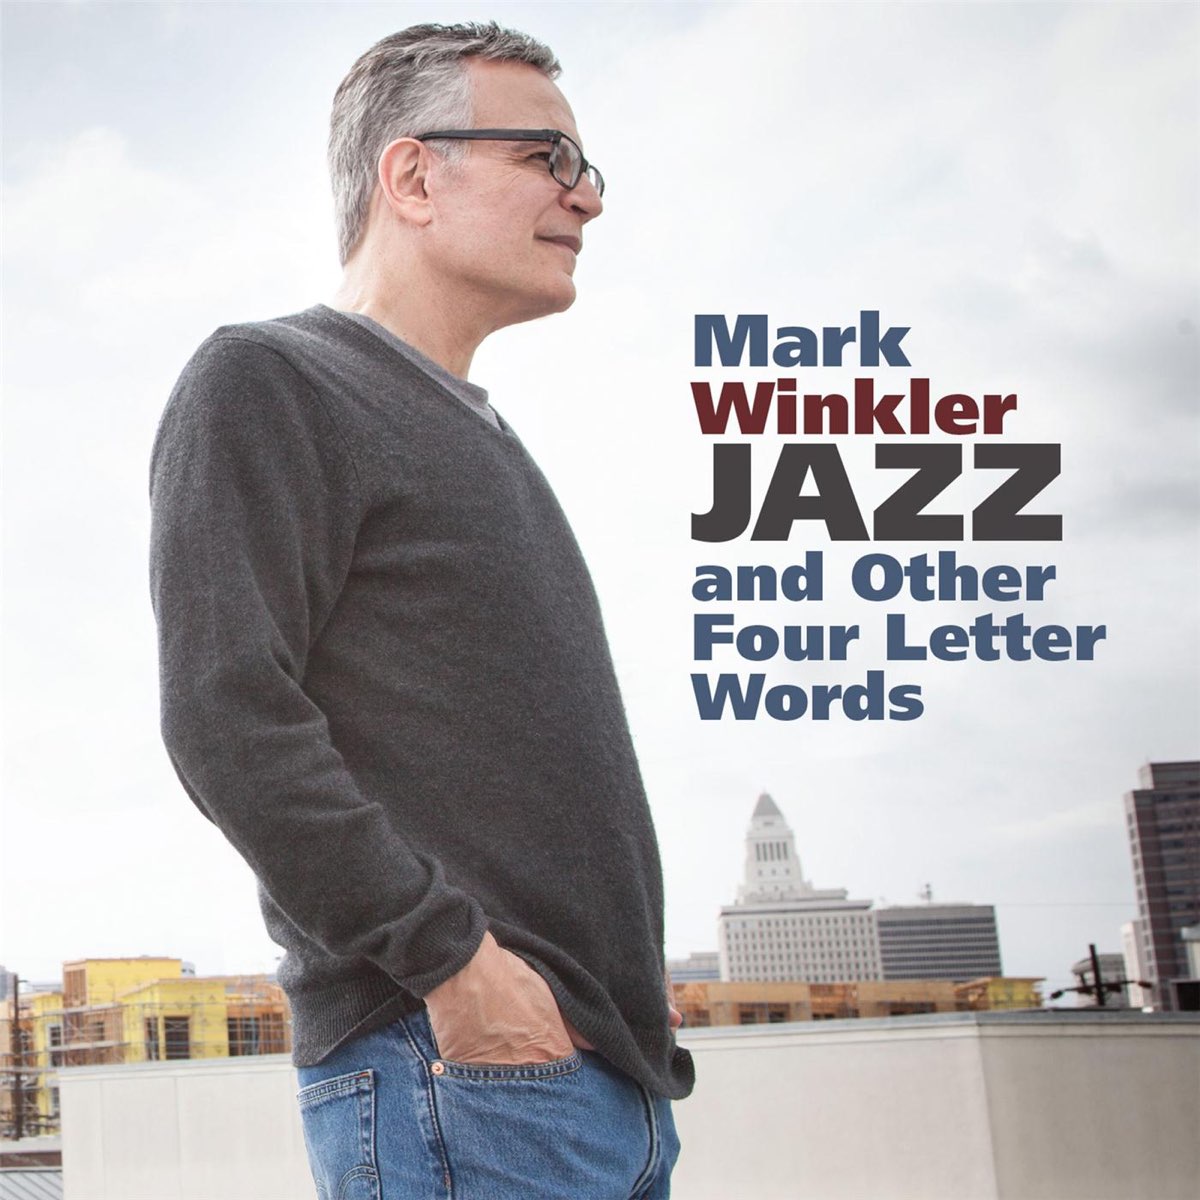 Mark your words. Dave Winkler фото певец афиша.